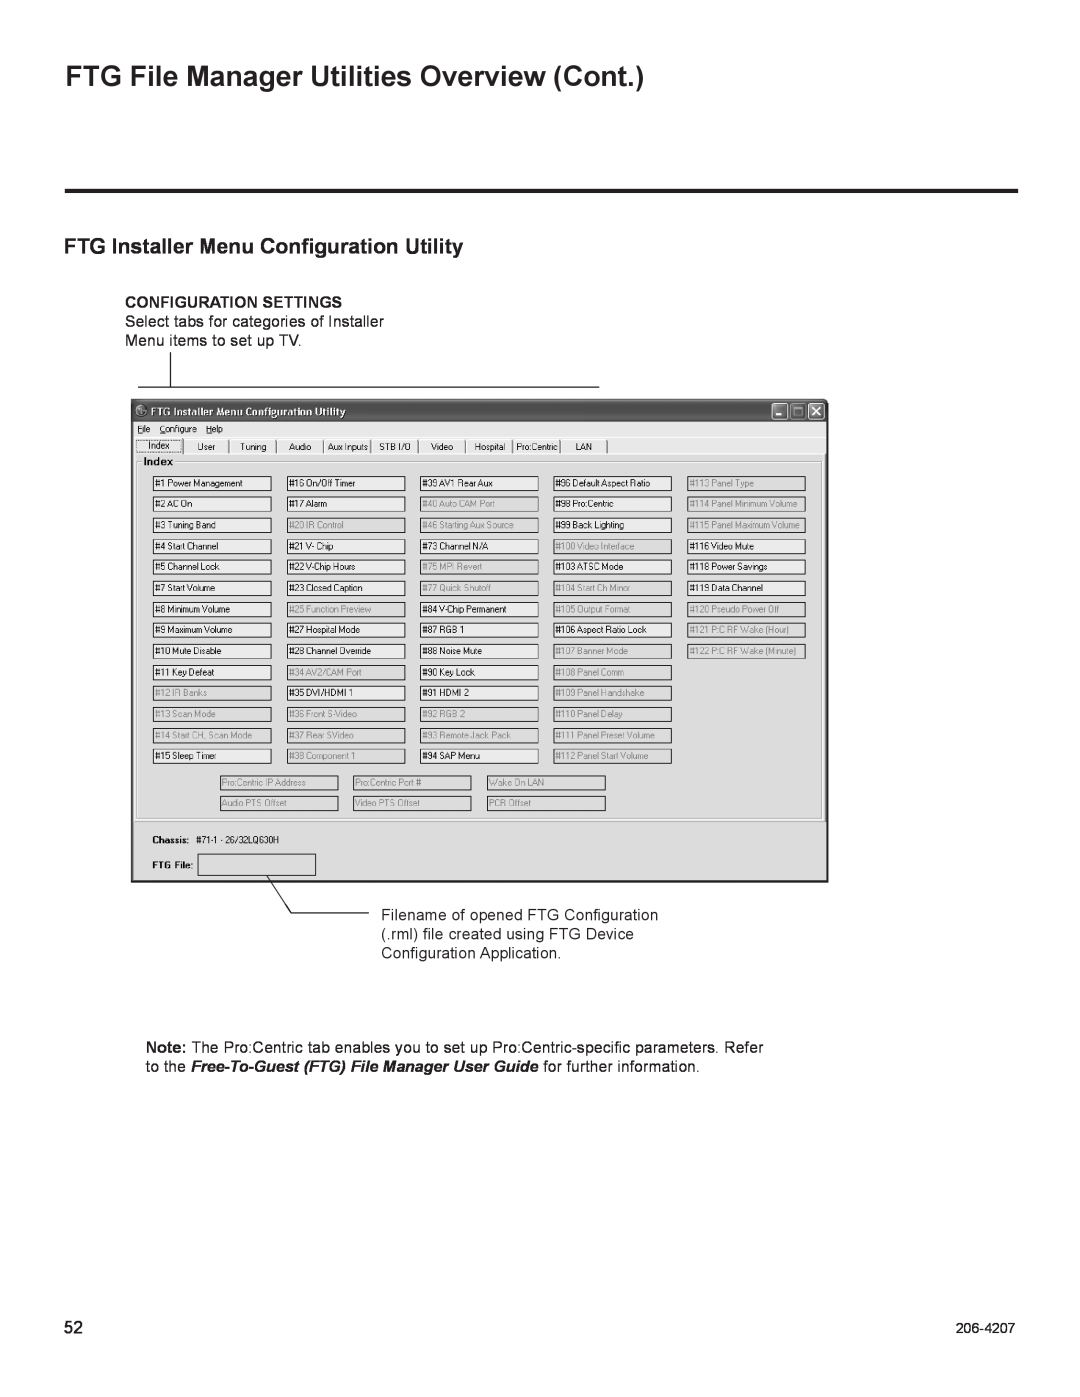 LG Electronics 42CQ610H, 32LQ630H FTG File Manager Utilities Overview Cont, FTG Installer Menu Configuration Utility 